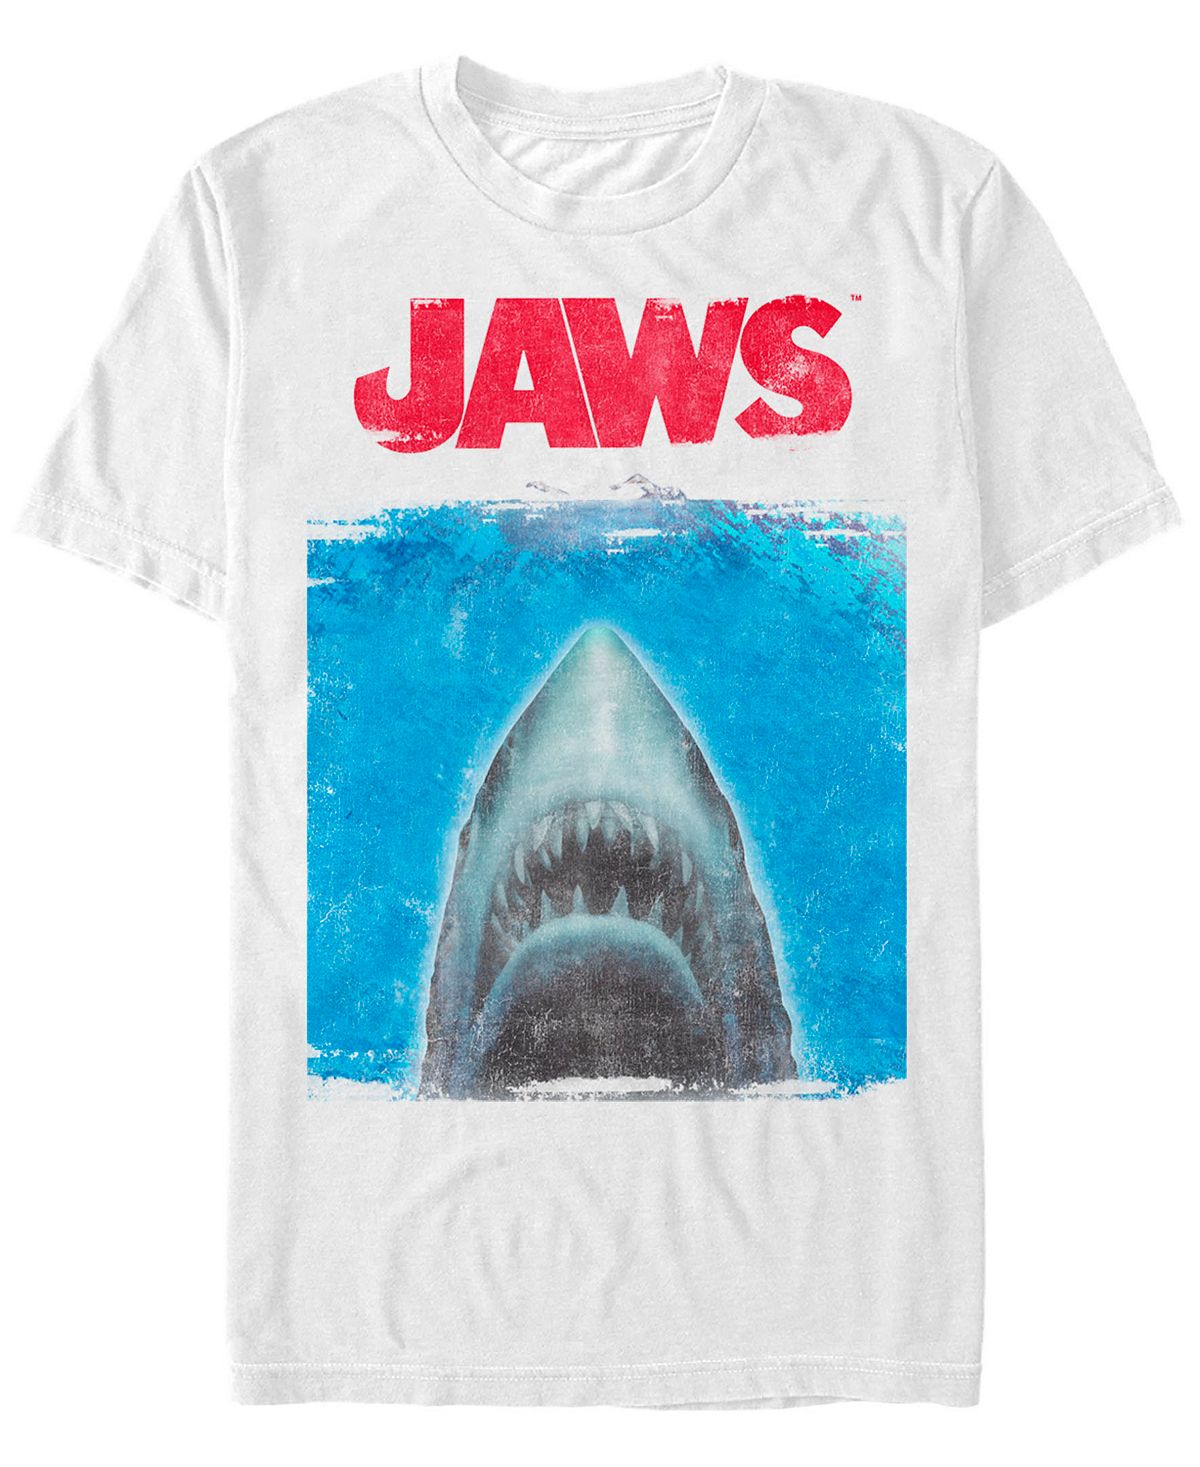 Мужская футболка с короткими рукавами с изображением акулы «челюсти» Fifth Sun, белый мэтт хупер с аквалангом челюсти фигурка 20см matt hooper shark cage jaws